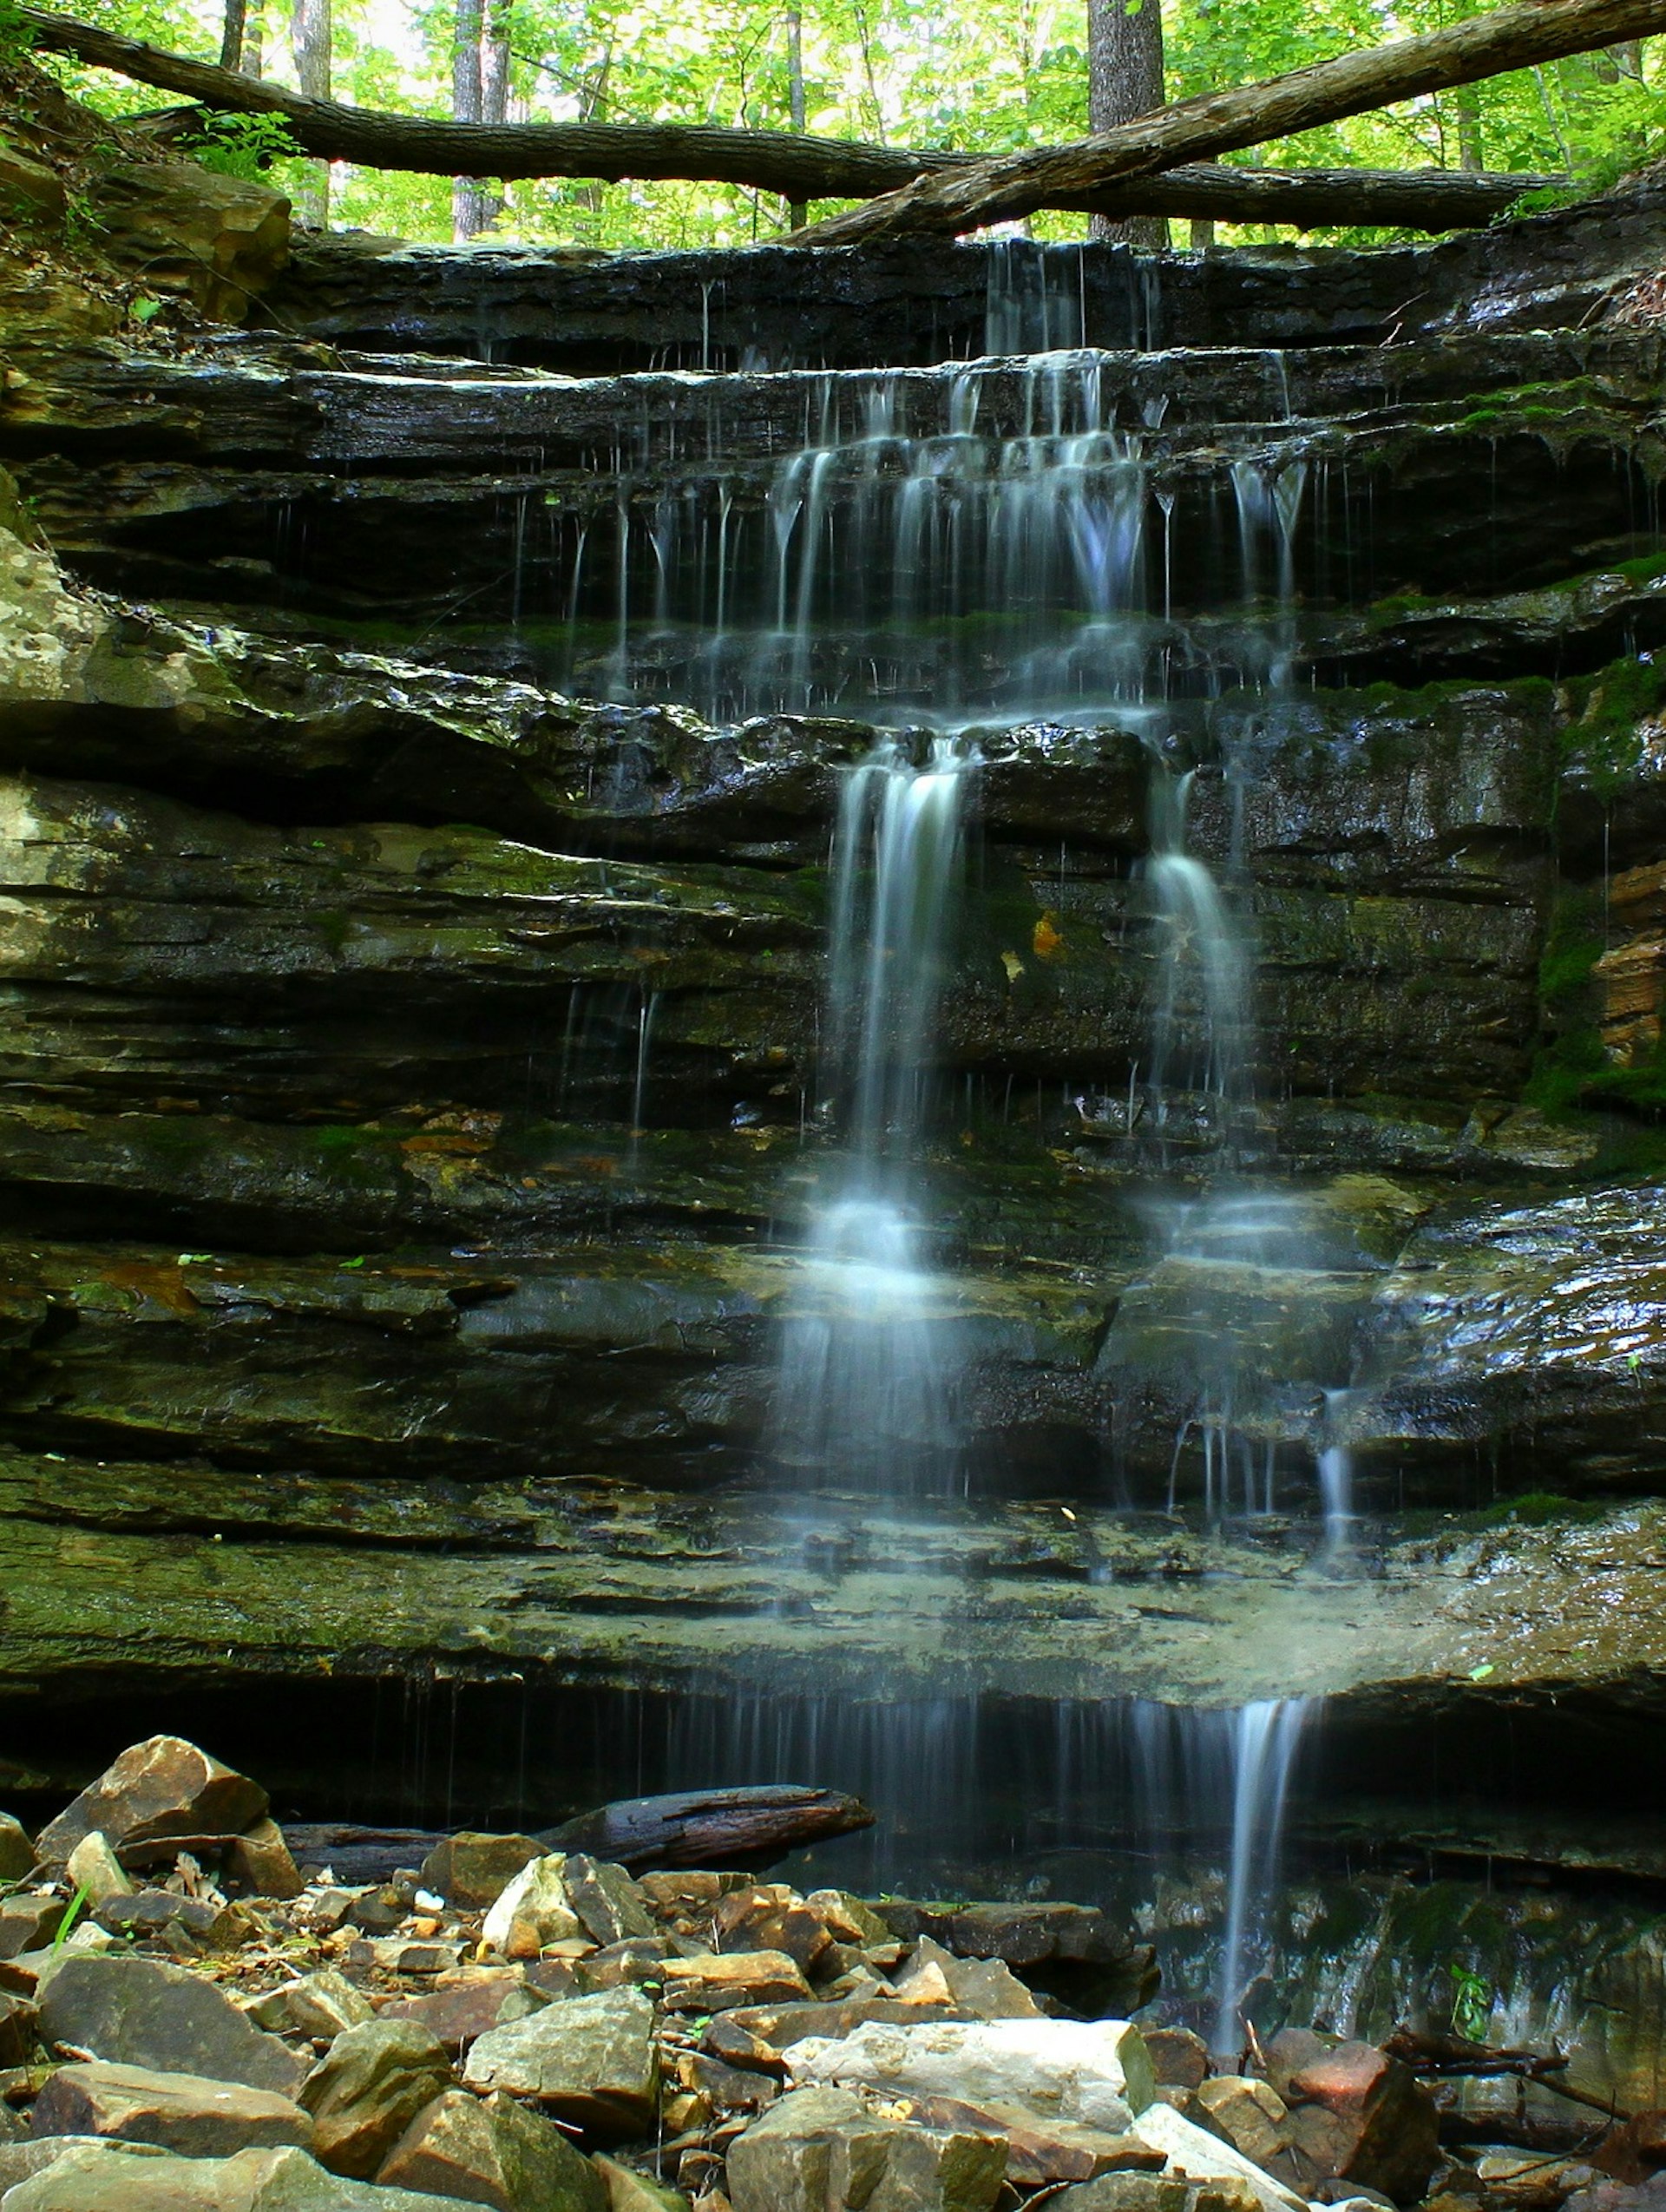 Trickling waterfall runs over limestone rocks.